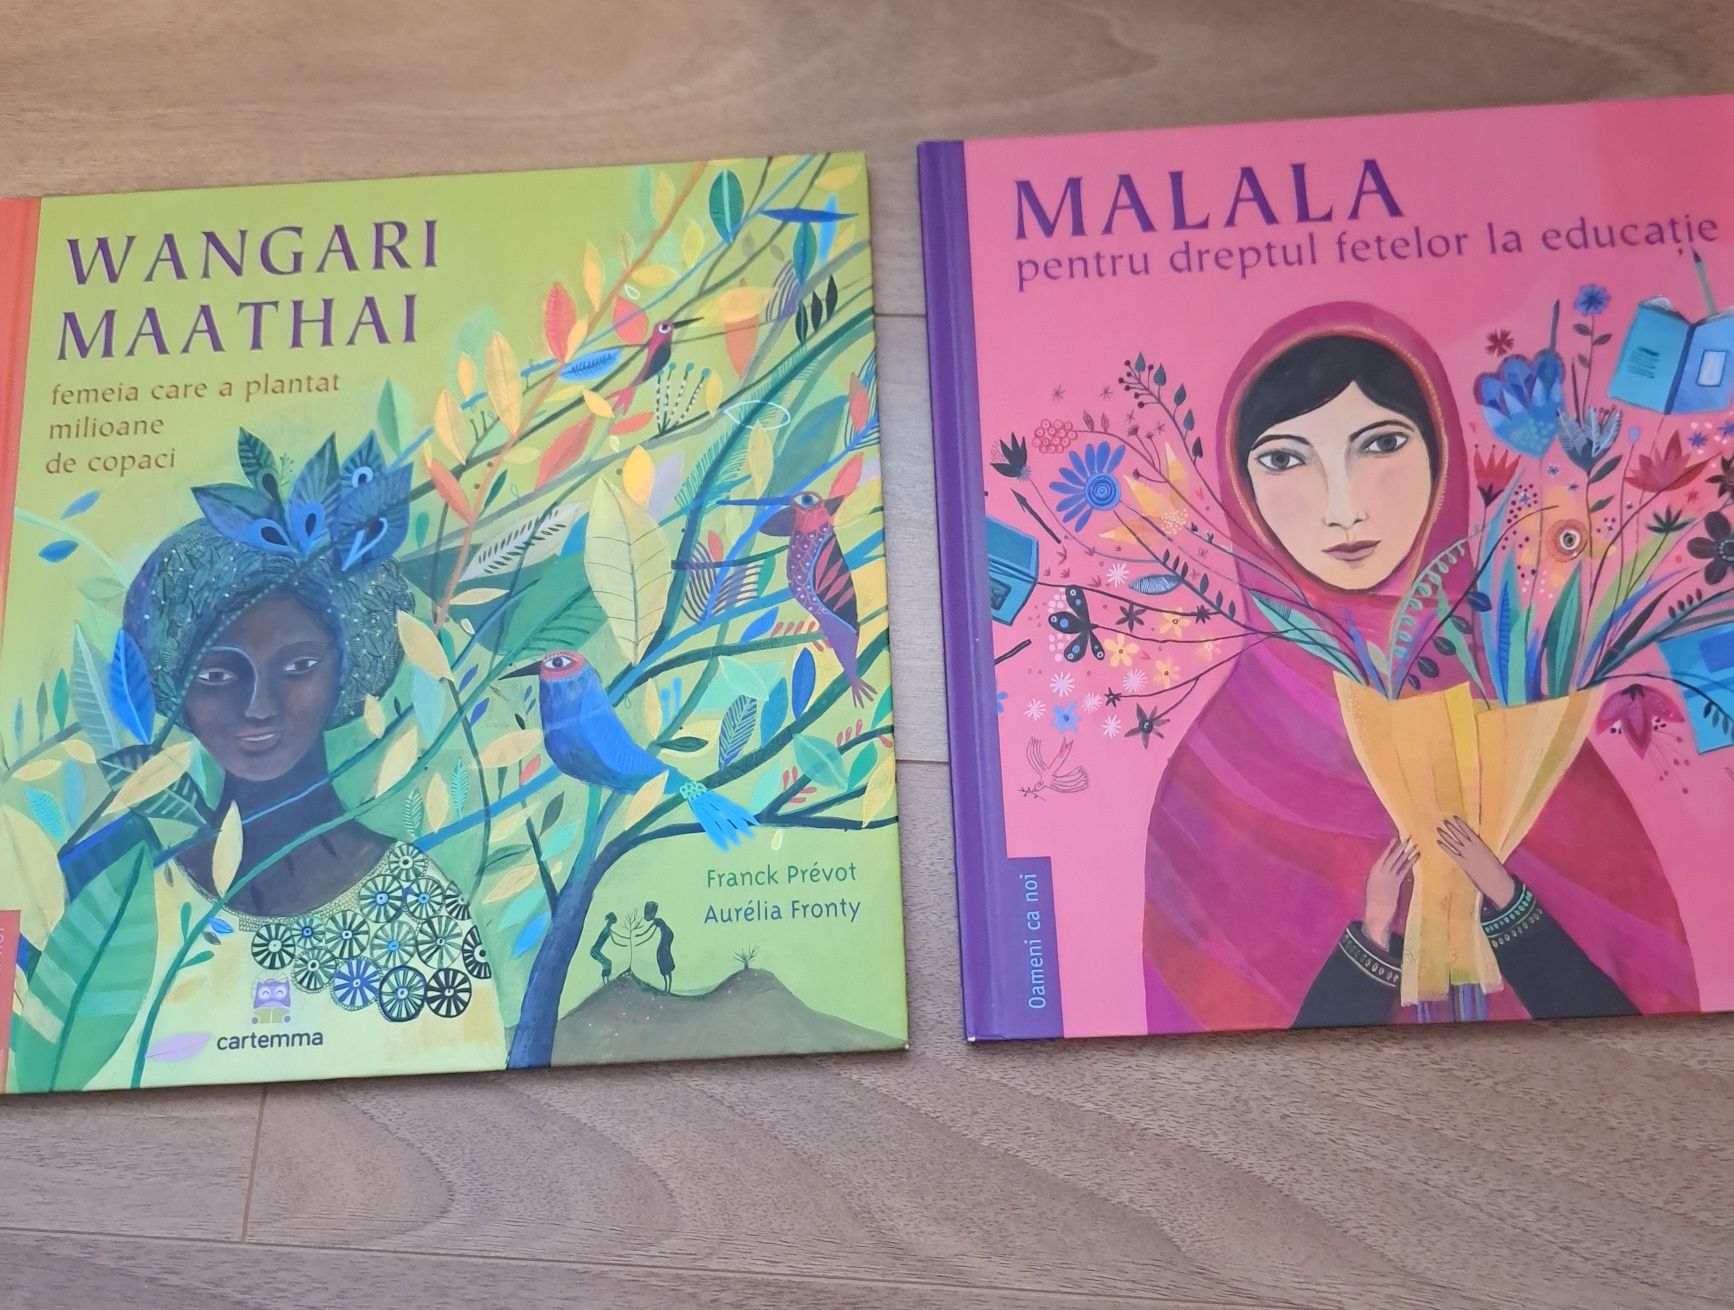 Carti Cartemma Malala si Wangari Maathai